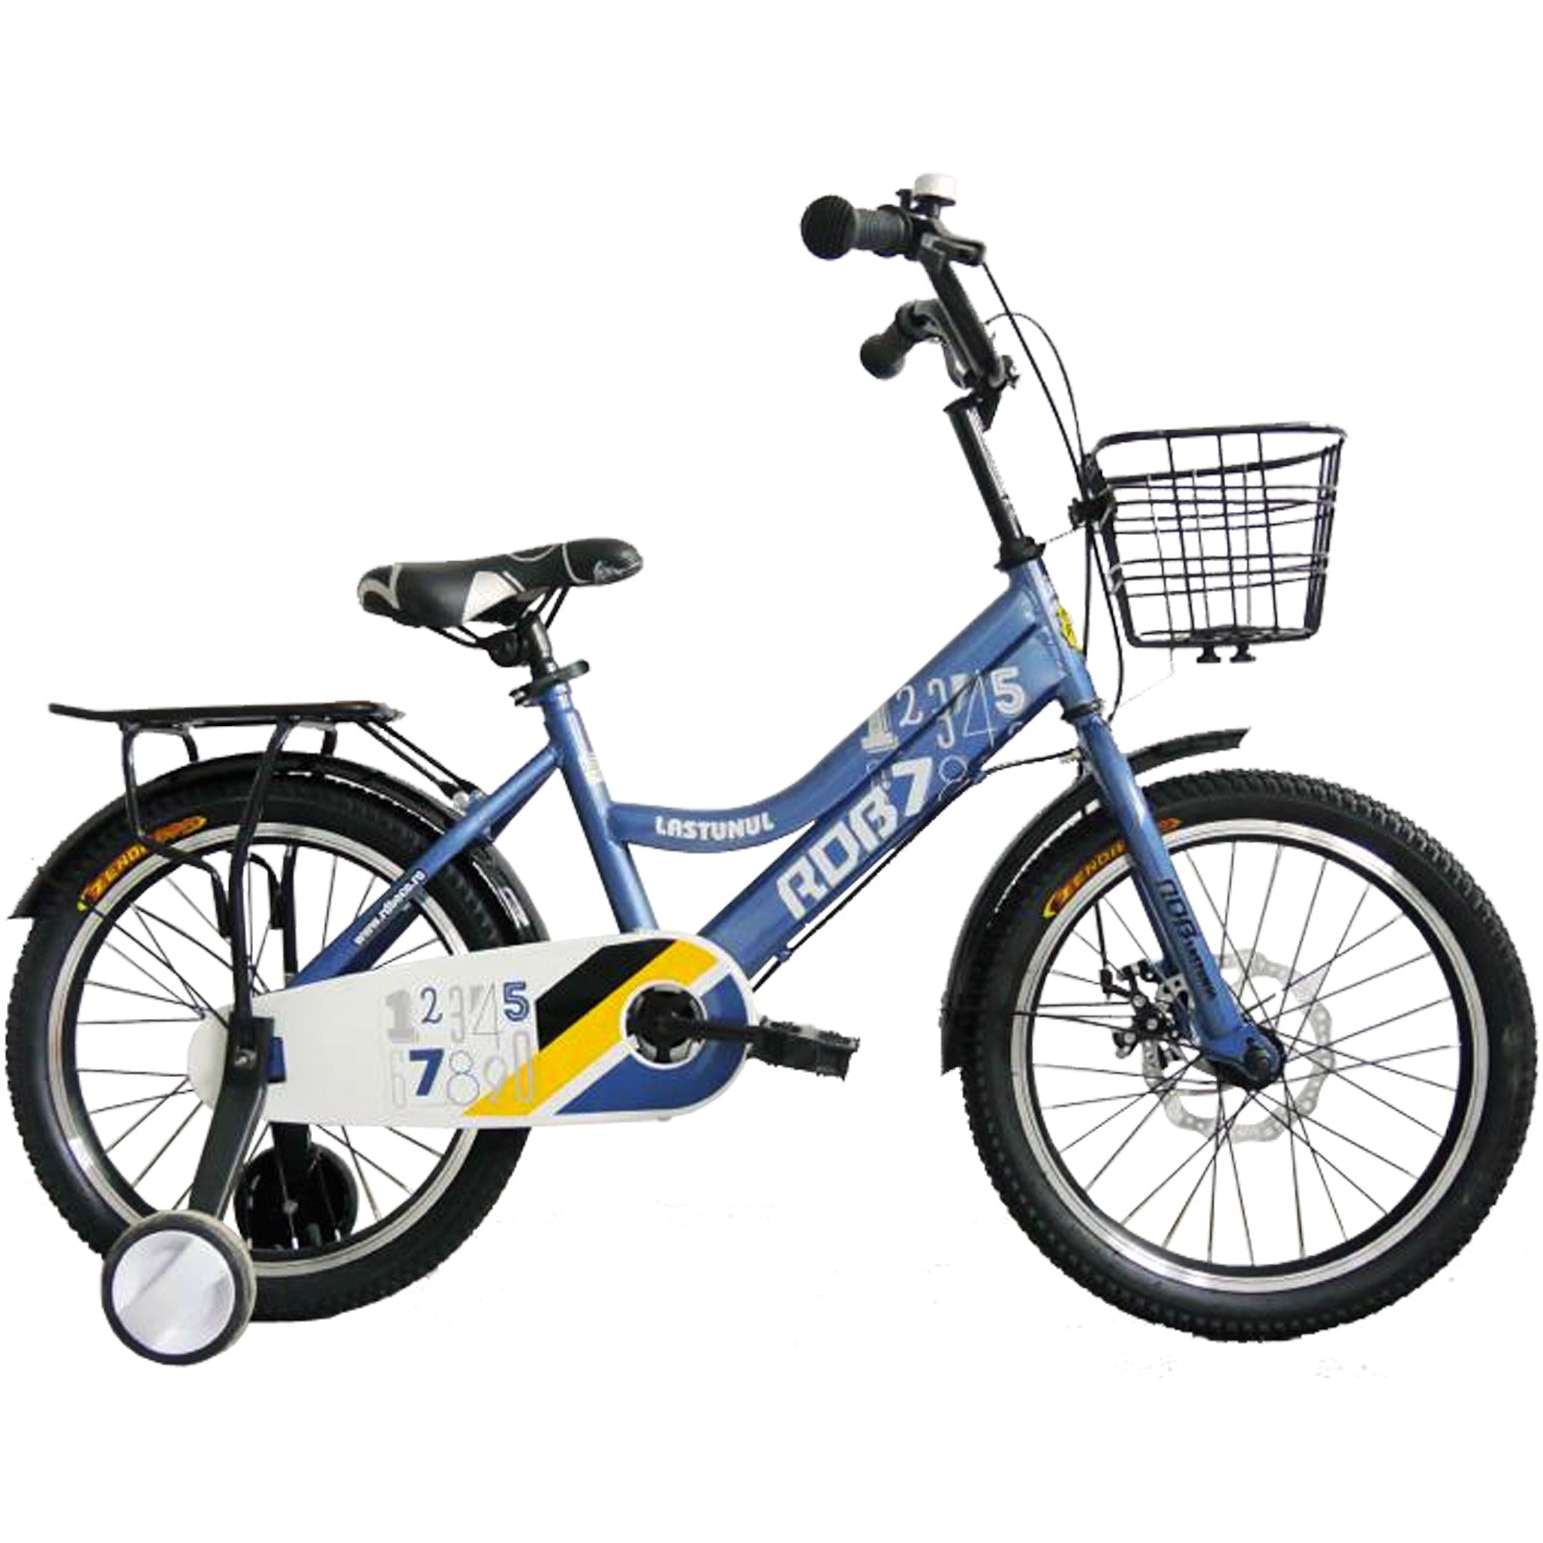 Fotografie Bicicleta copii RDB Lastunul, 18 inch, albastru